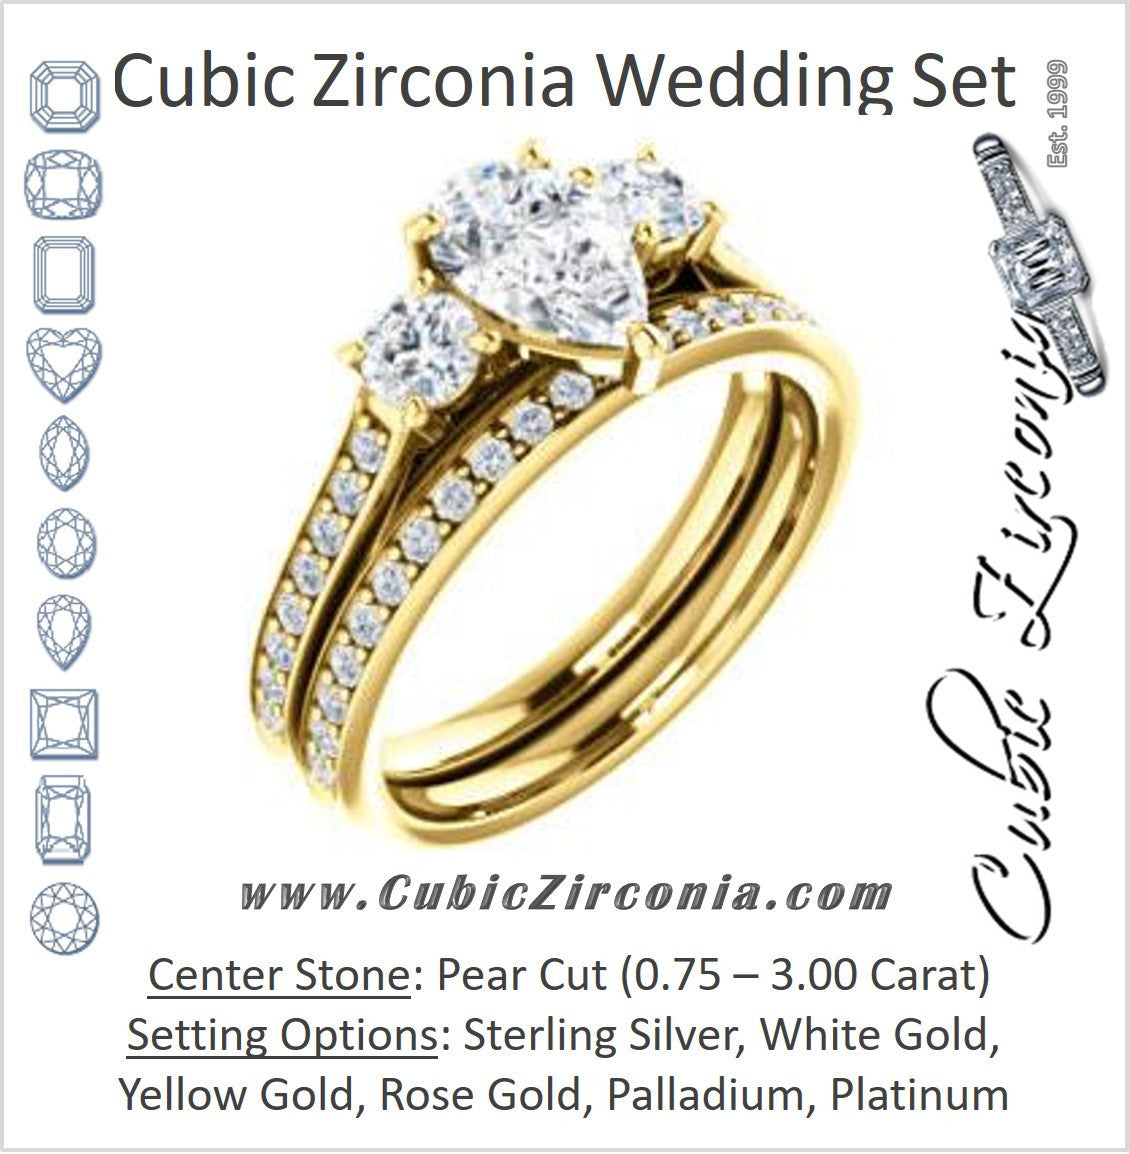 CZ Wedding Set, featuring The Tess engagement ring (Customizable Pear Cut Trellis-Enhanced Bridge Setting with Semi-Pavé Band)